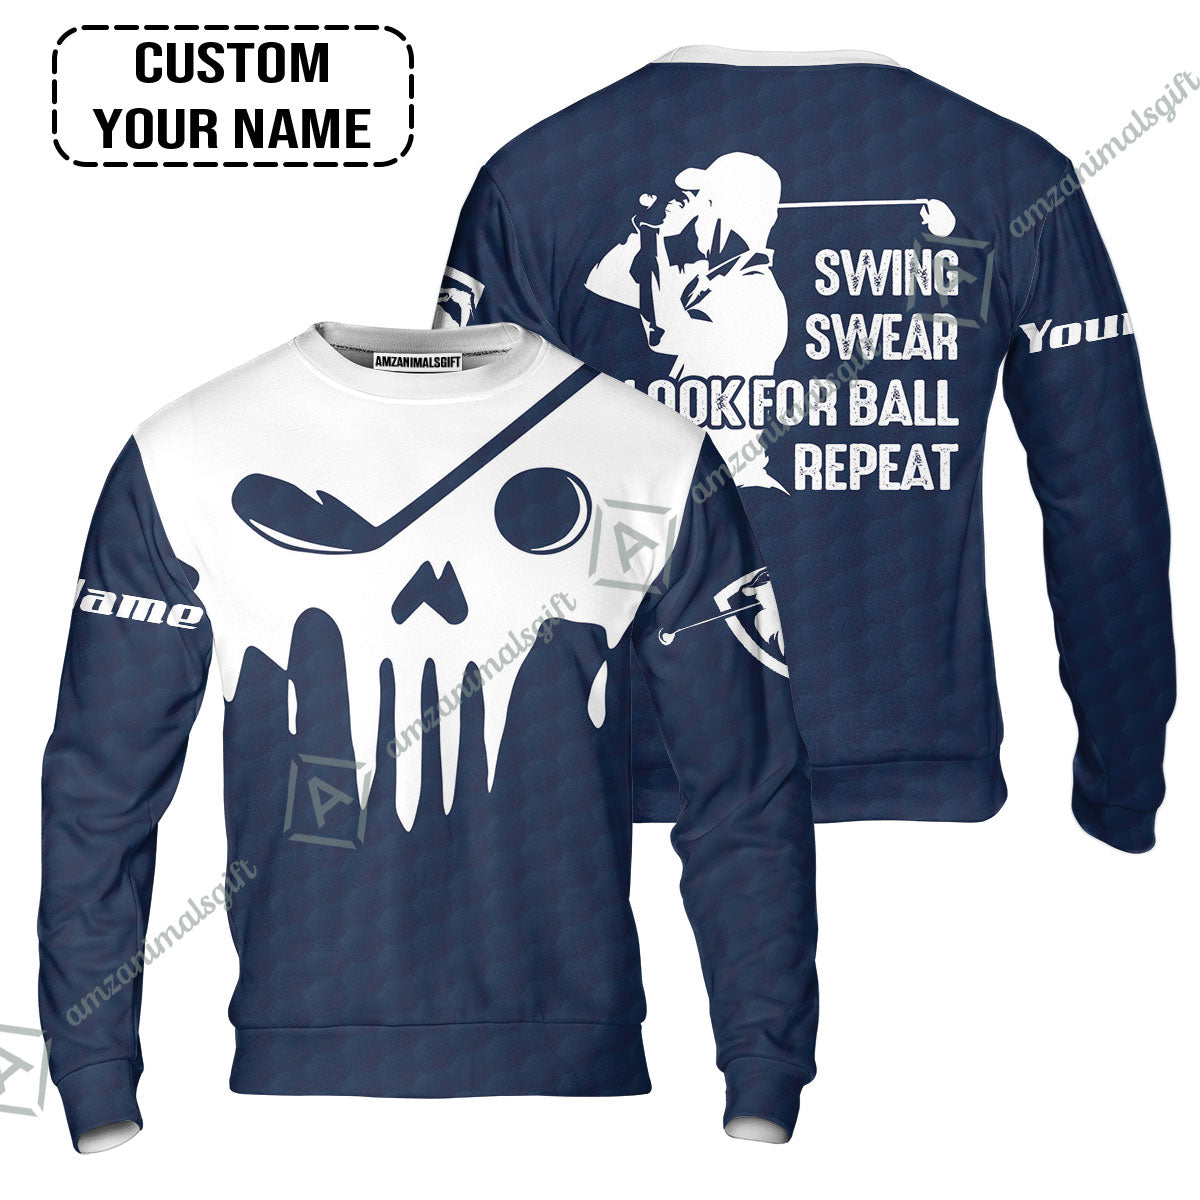 Golf Sweatshirt - Custom Name Golf Skull - Swing Swear Look For Ball Repeat Sweatshirt